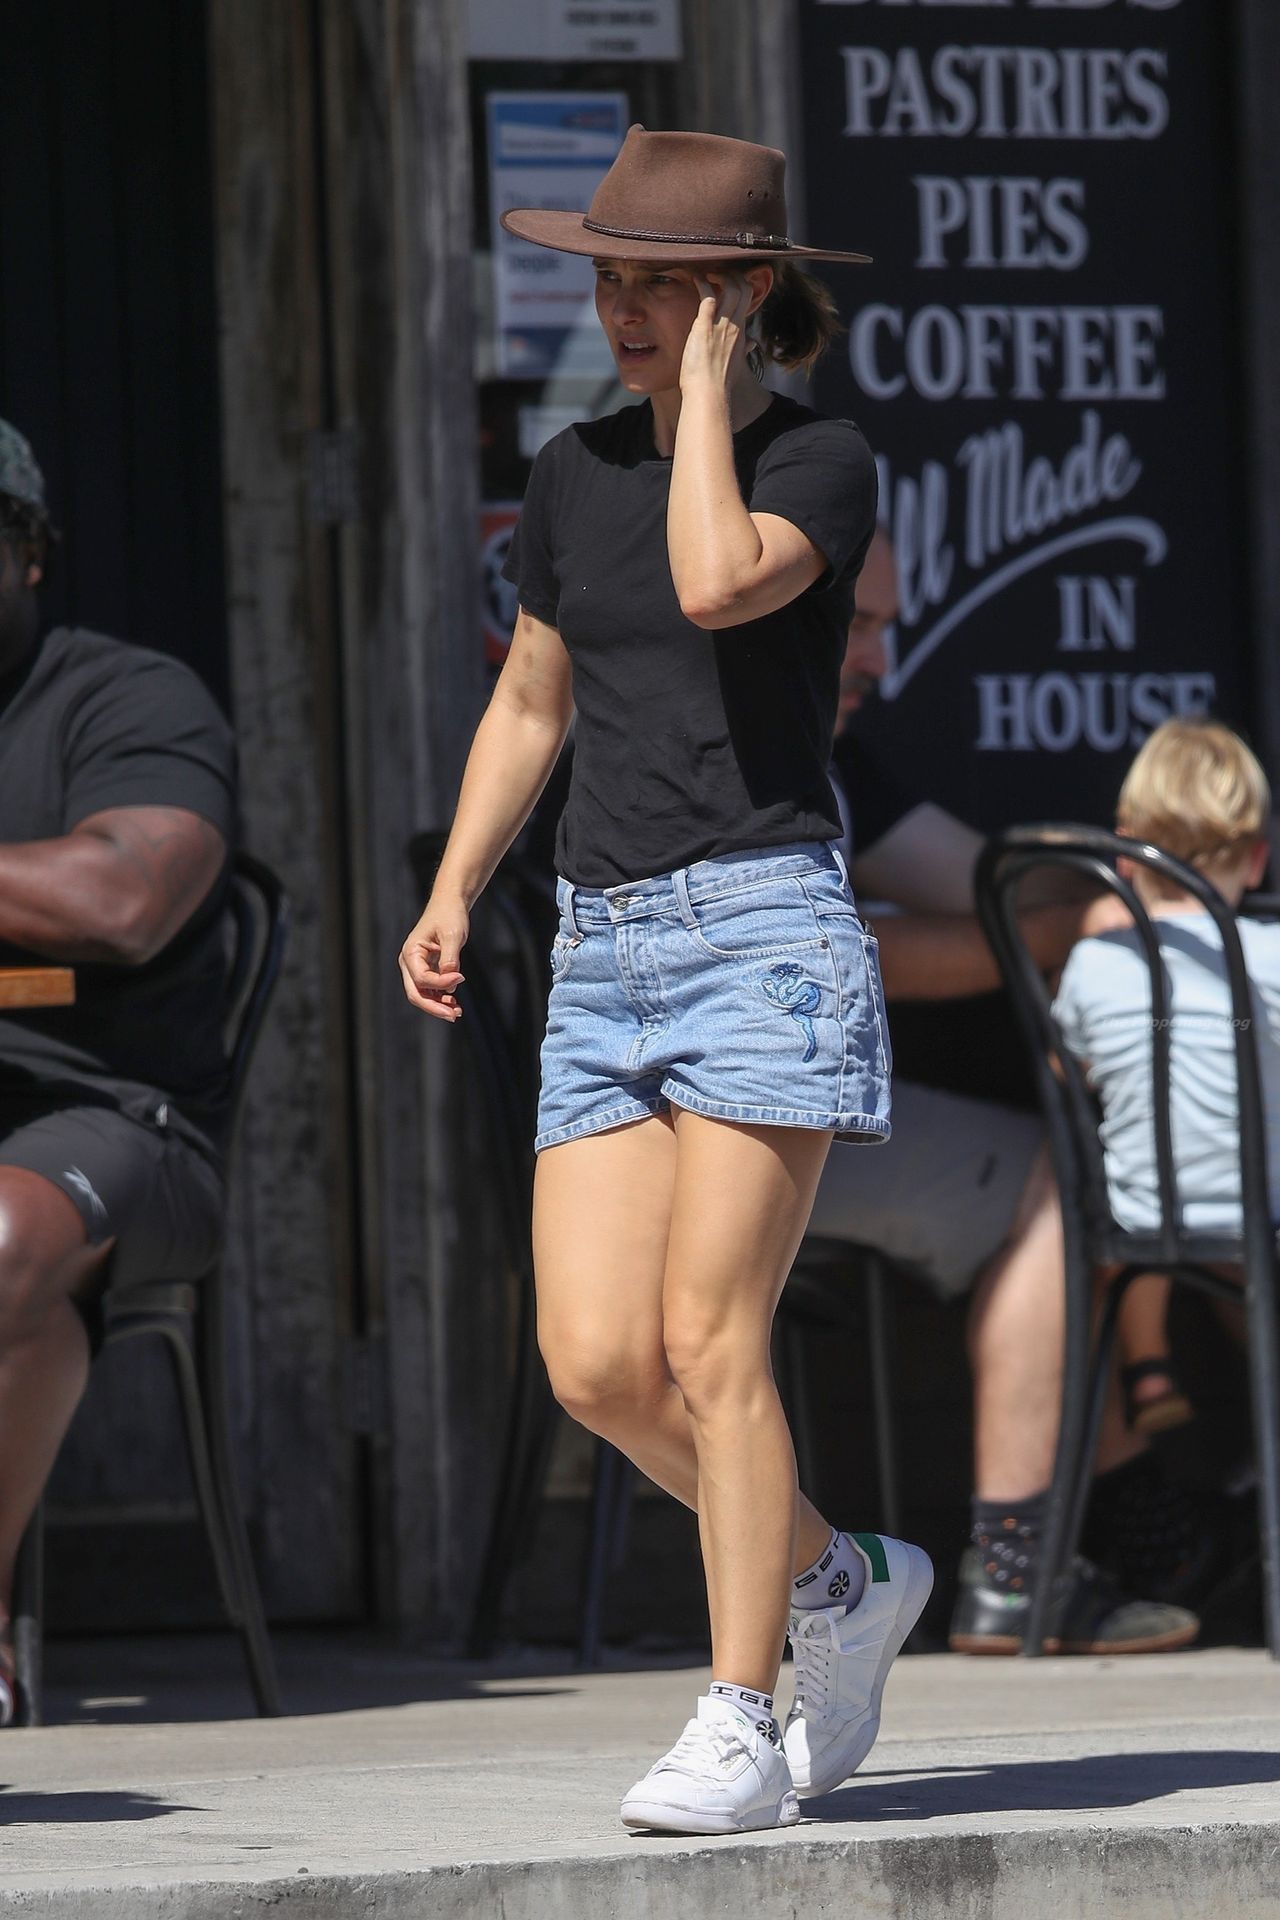 Braless Natalie Portman is Pictured Enjoying Breakfast with Her Parents in Sydney (56 Photos)